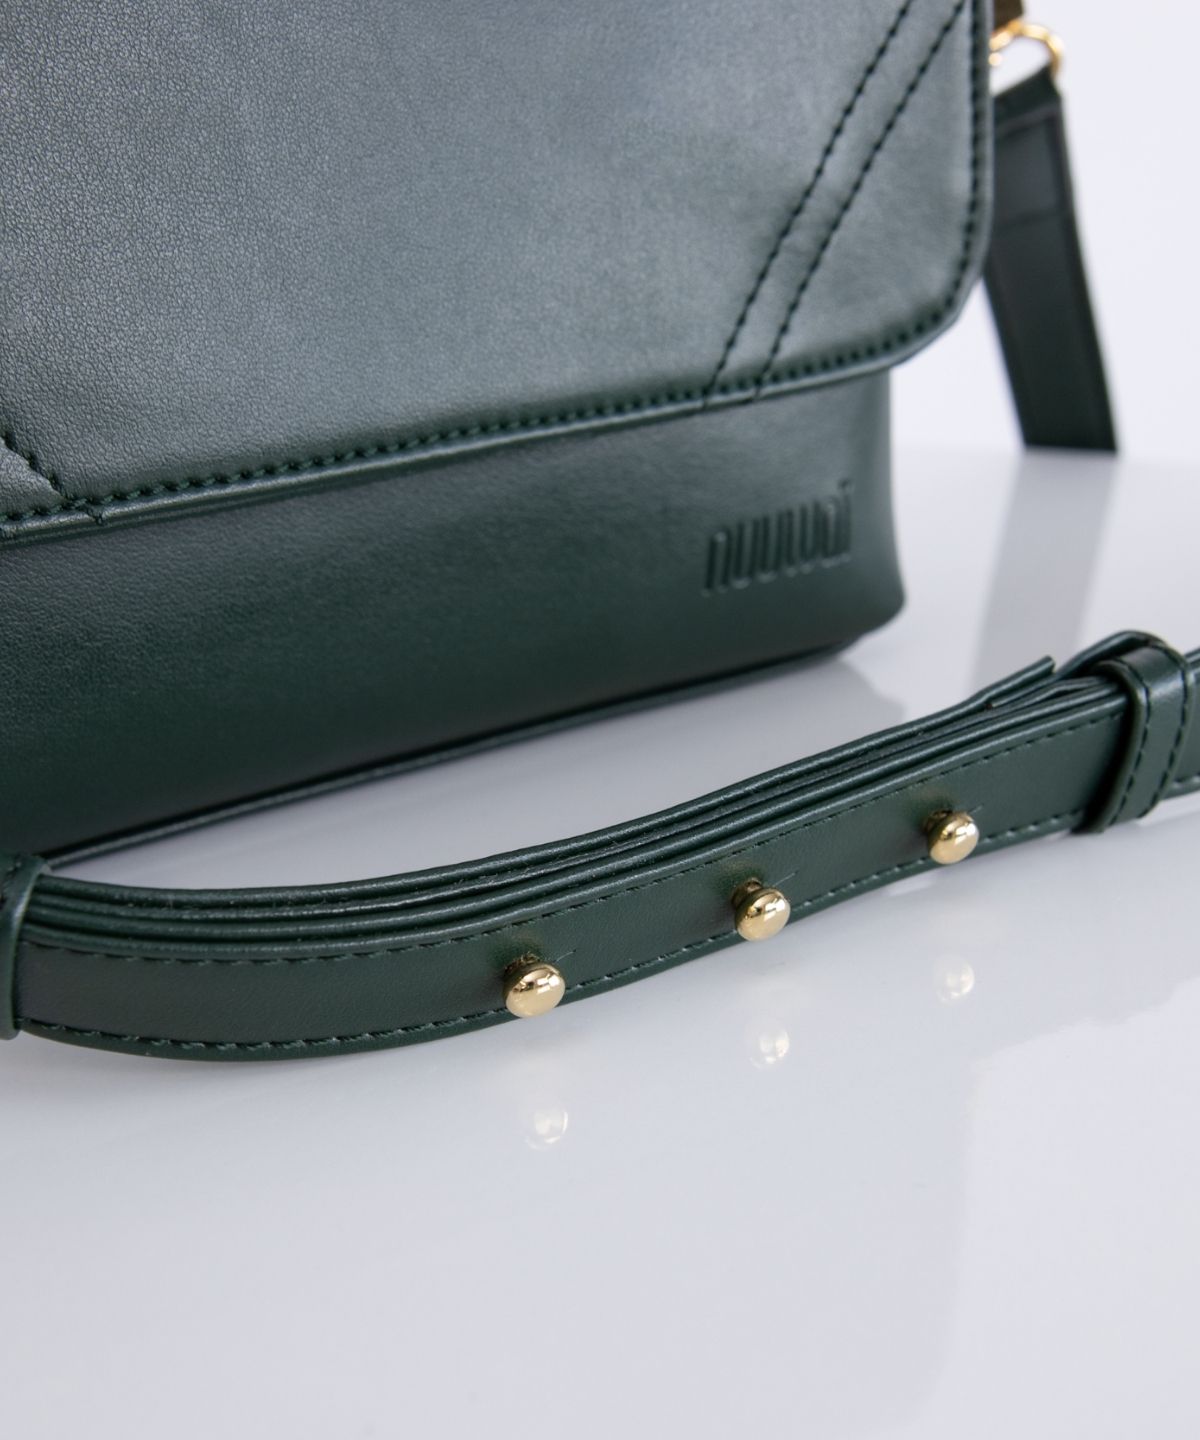 WYAQJLV Small Crossbody Bags for Women Luxury Wallet Vegan Leather